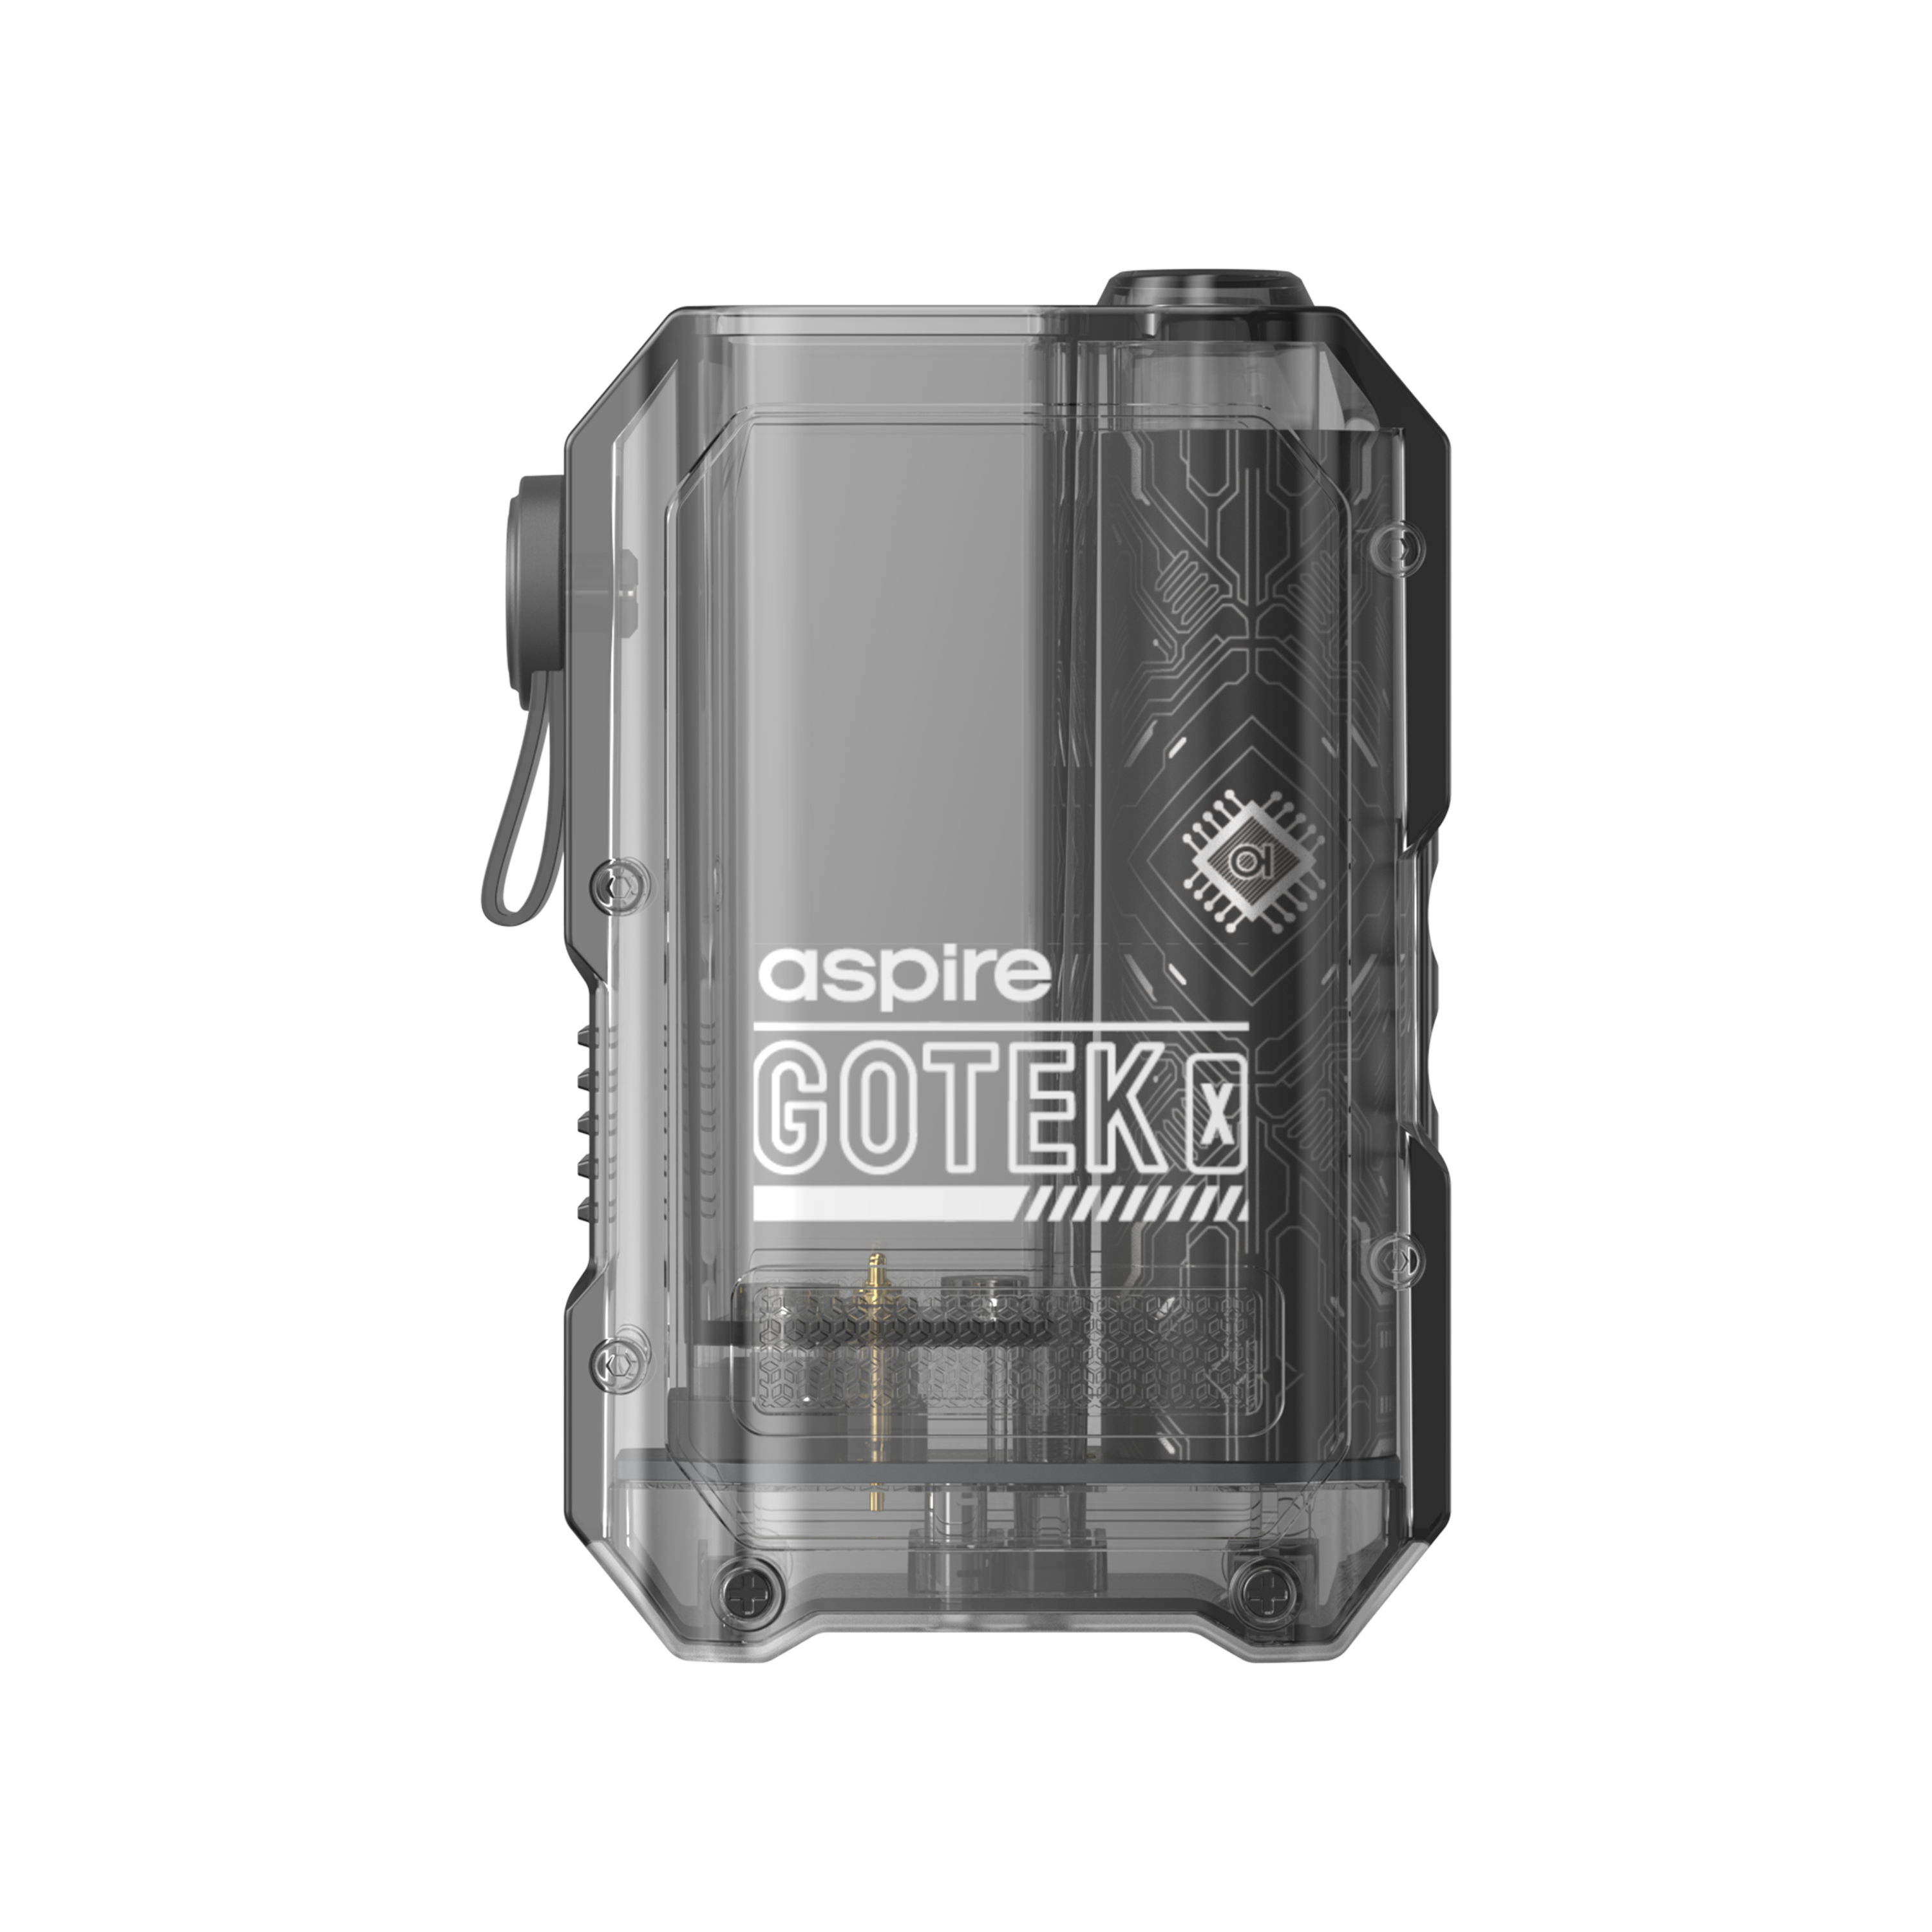 Aspire Gotek X Pod Kit - Explore a wide range of e-liquids, vape kits, accessories, and coils for vapers of all levels - Vape Saloon